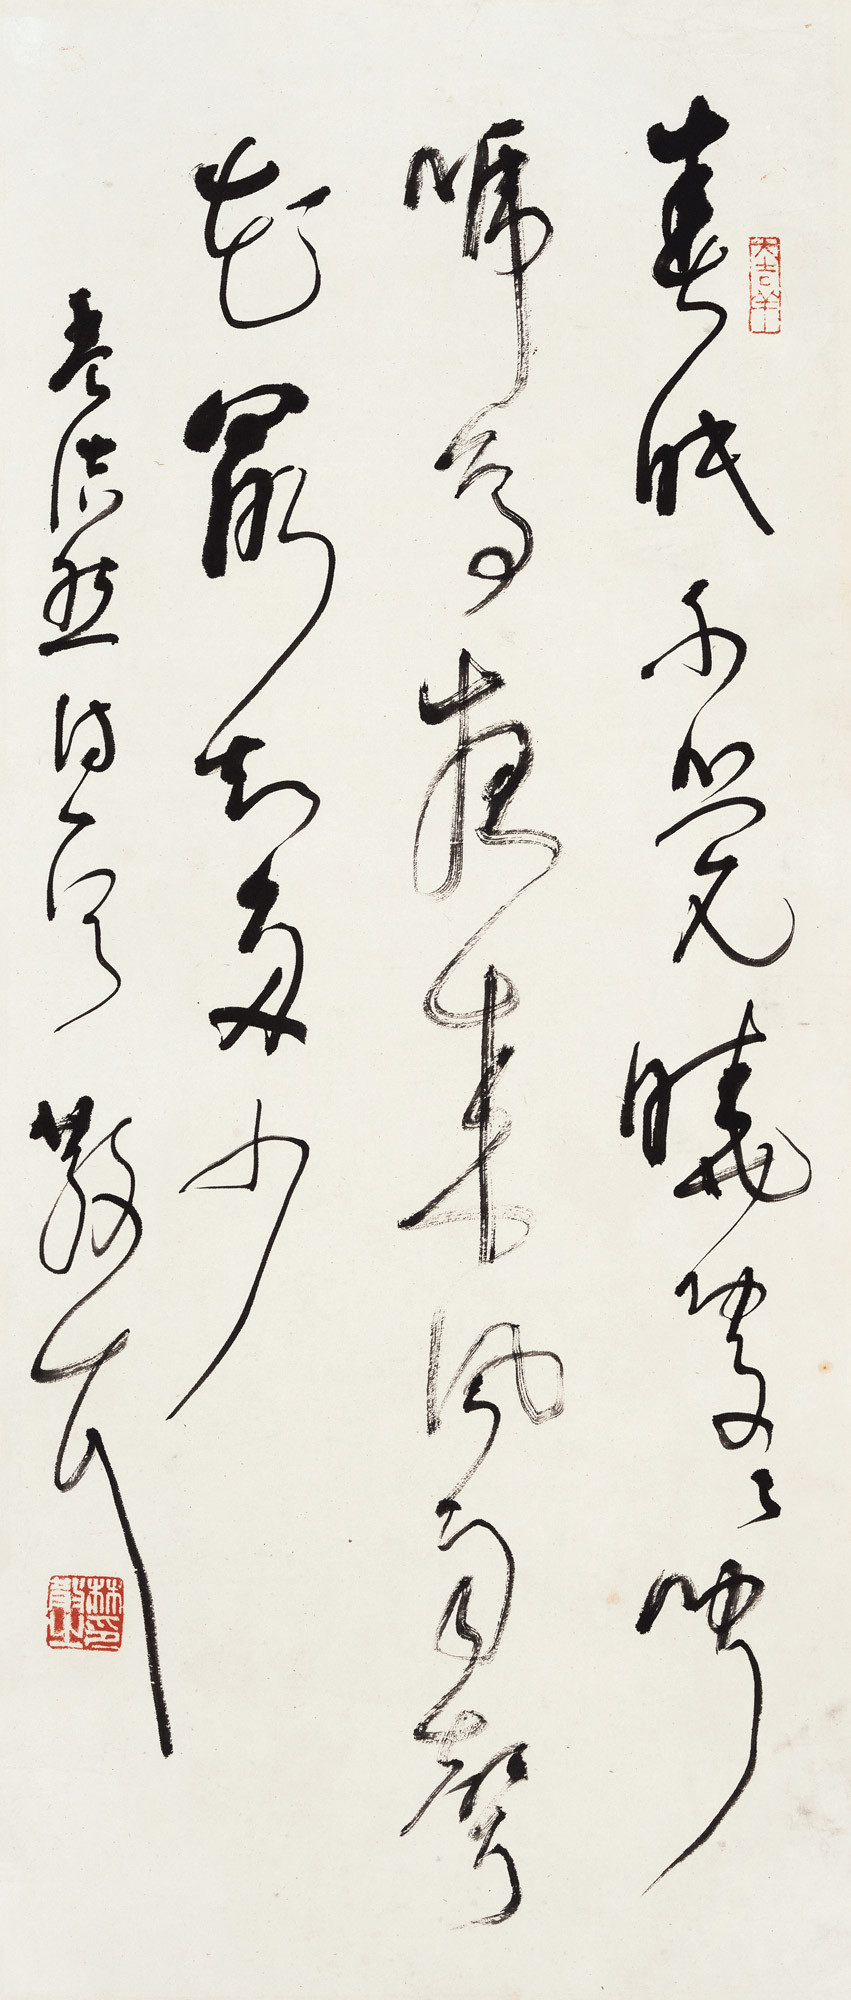 Calligraphic Poem by Meng Haoran in  Curise Script